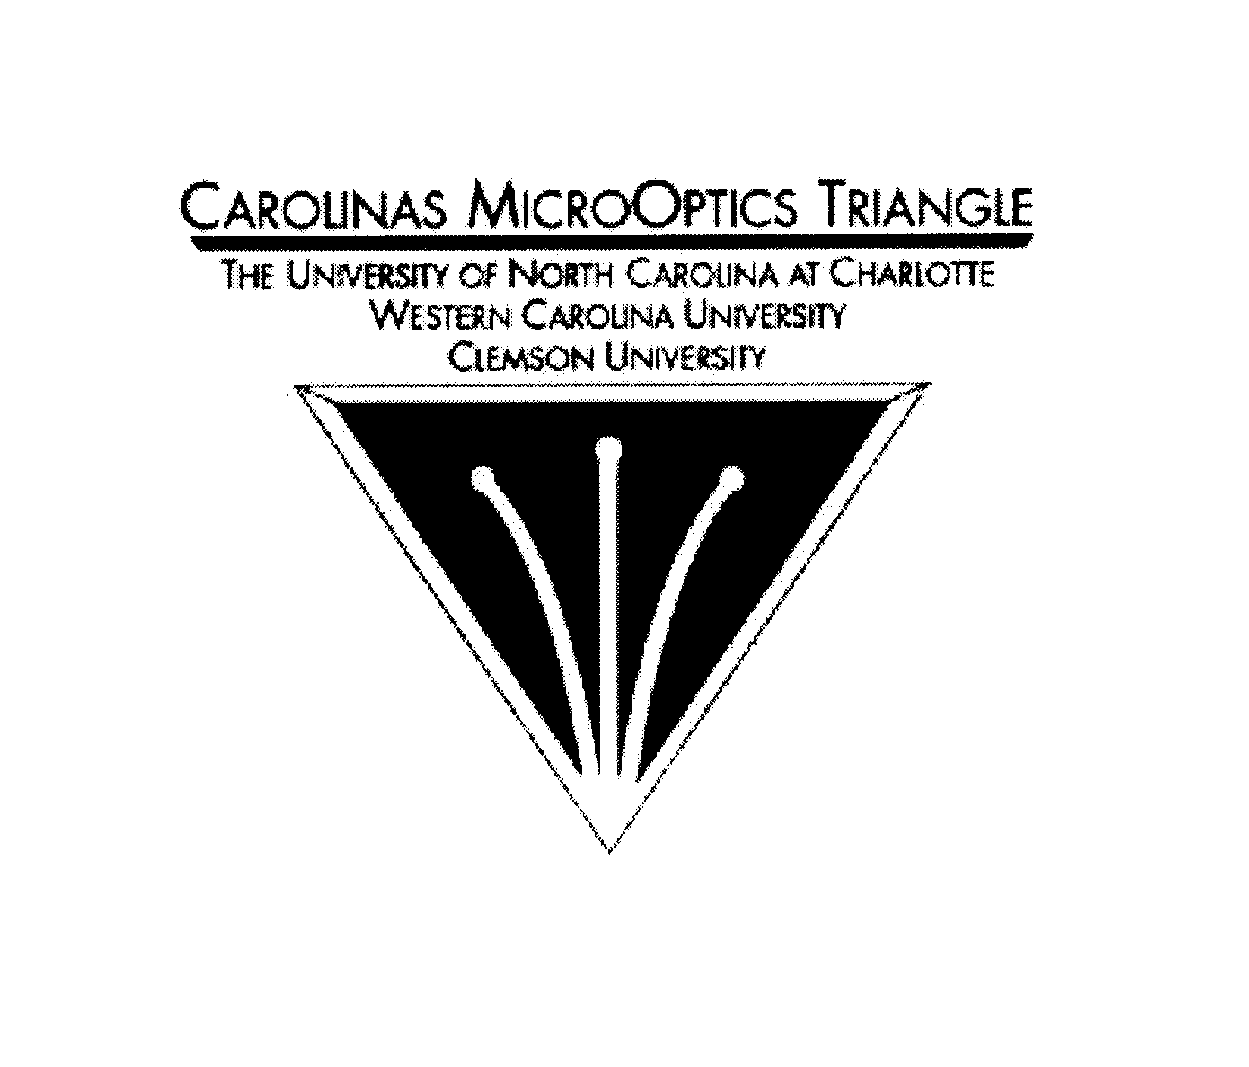  CAROLINAS MICROOPTICS TRIANGLE THE UNIVERSITY OF NORTH CAROLINA AT CHARLOTTE WESTERN CAROLINA UNIVERSITY CLEMSON UNIVERSITY